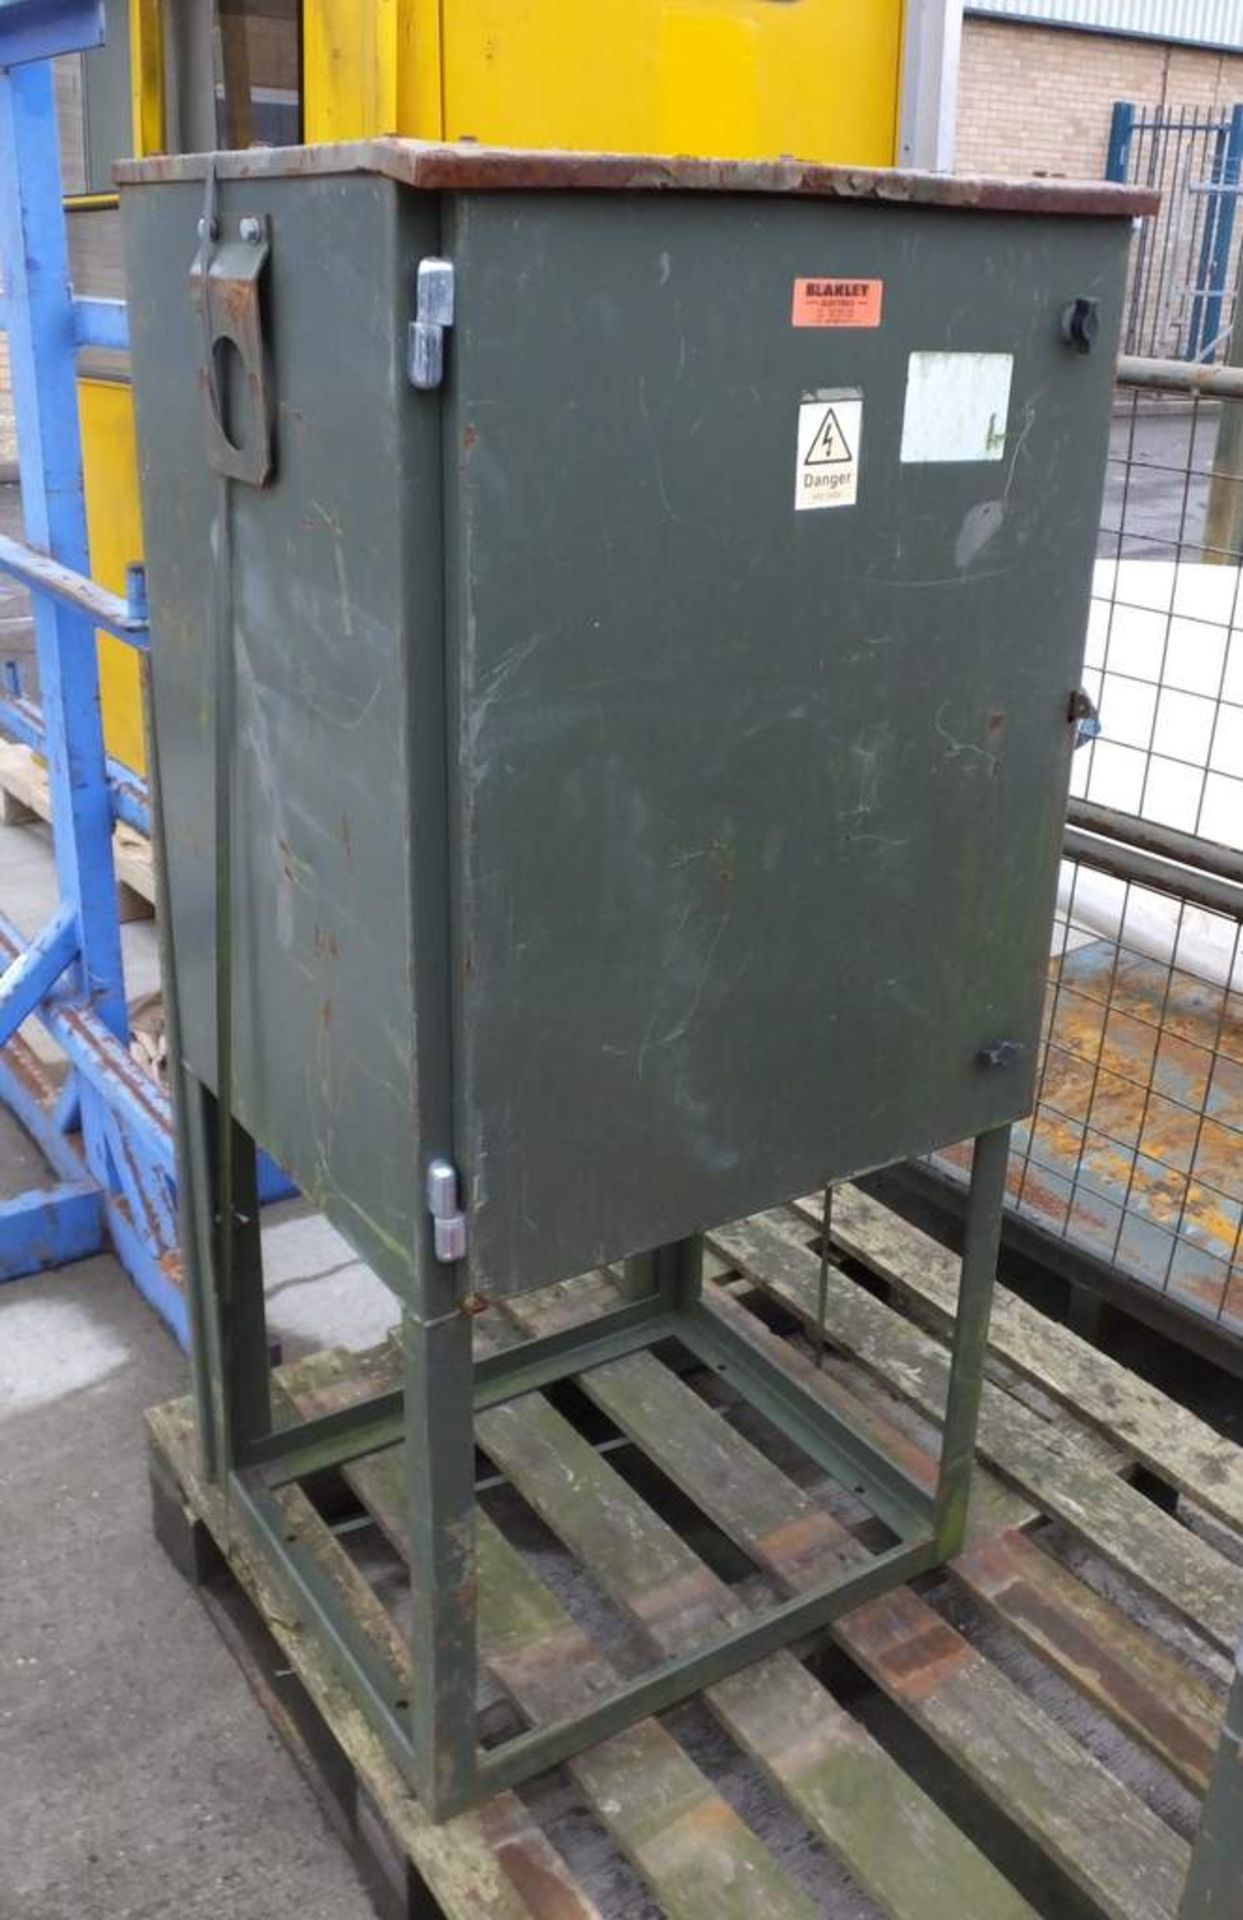 Lewden UCU 415v power distribution box